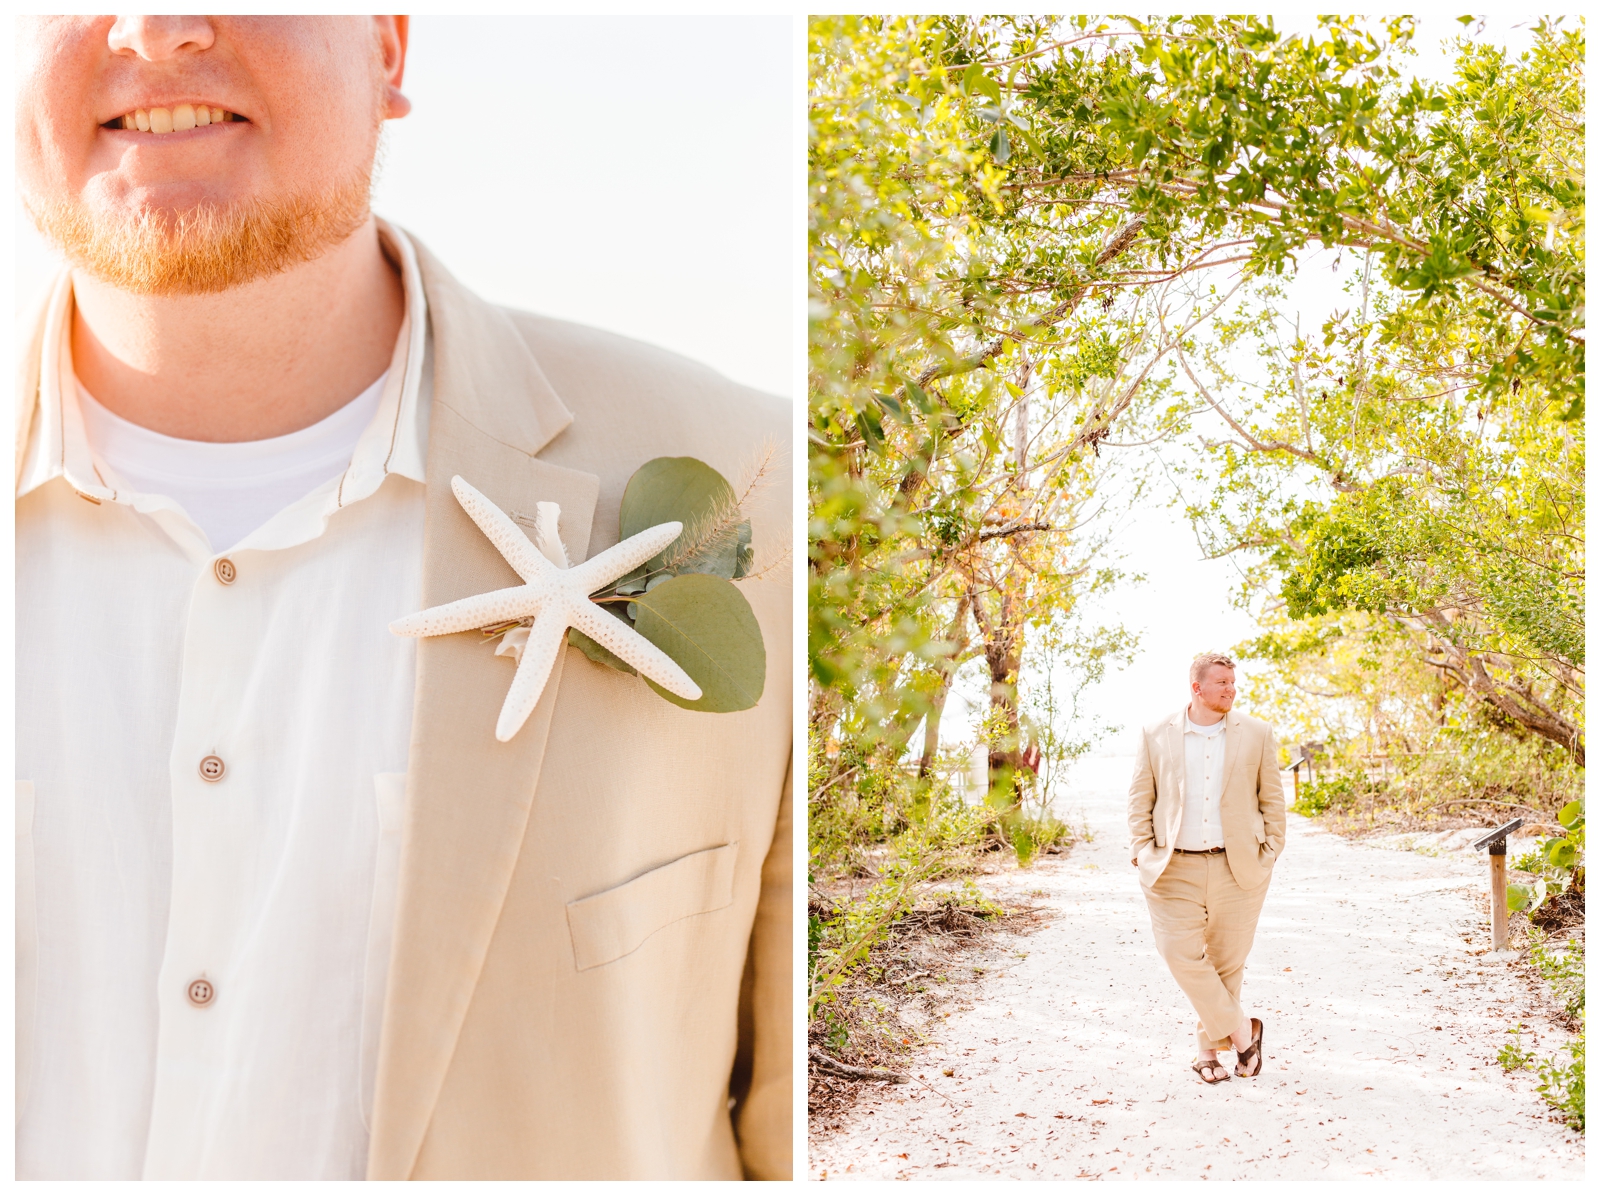 Romantic & Beachy Sea Glass Wedding Inspiration - Fort Myers, Florida - Brooke Michelle Photography